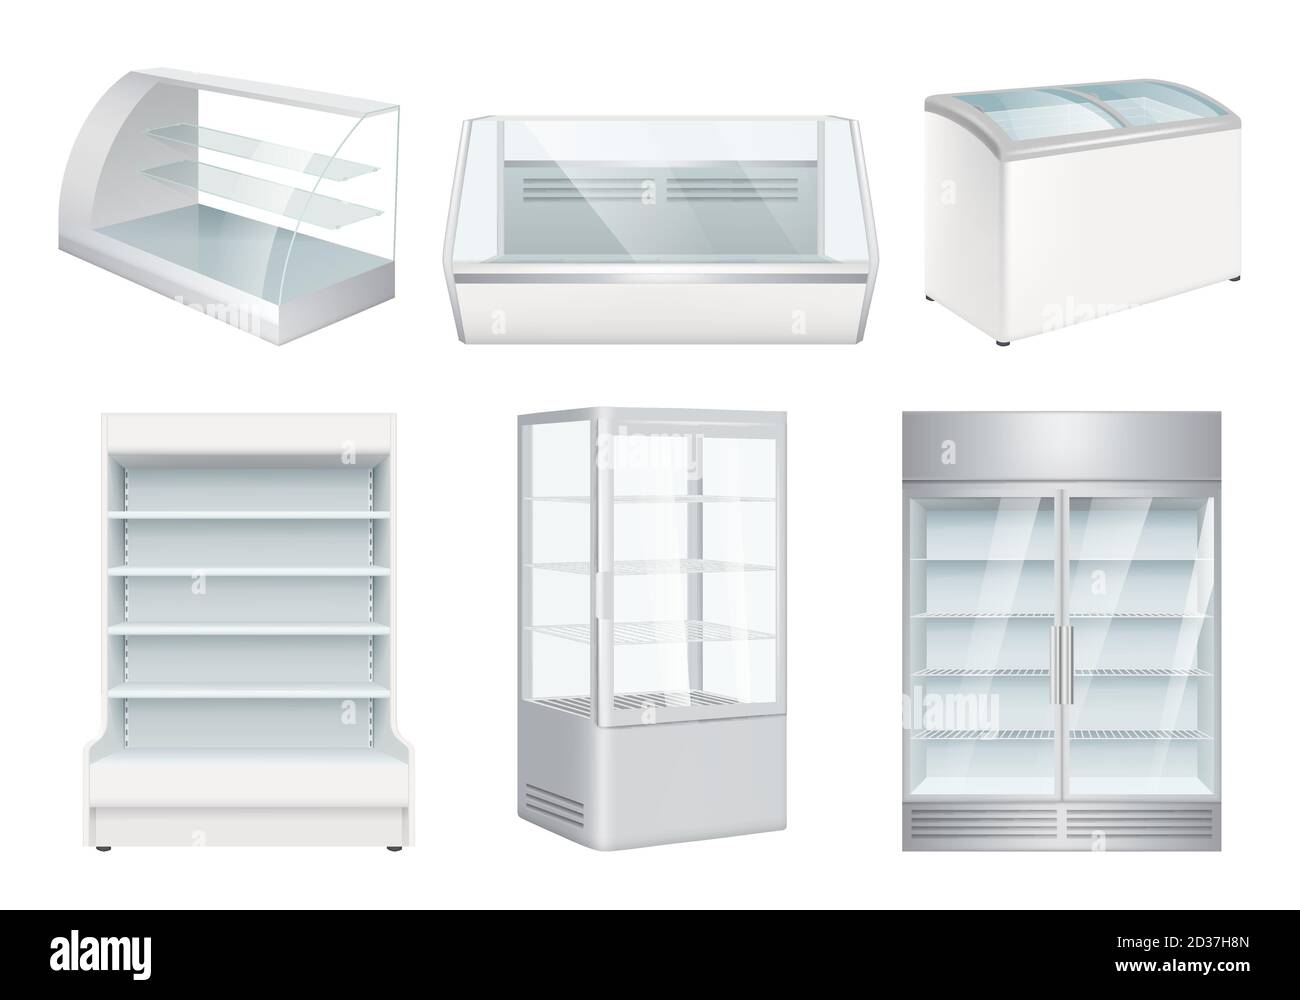 Refrigerator empty. Supermarket retail equipment vector realistic refrigerators for store Stock Vector